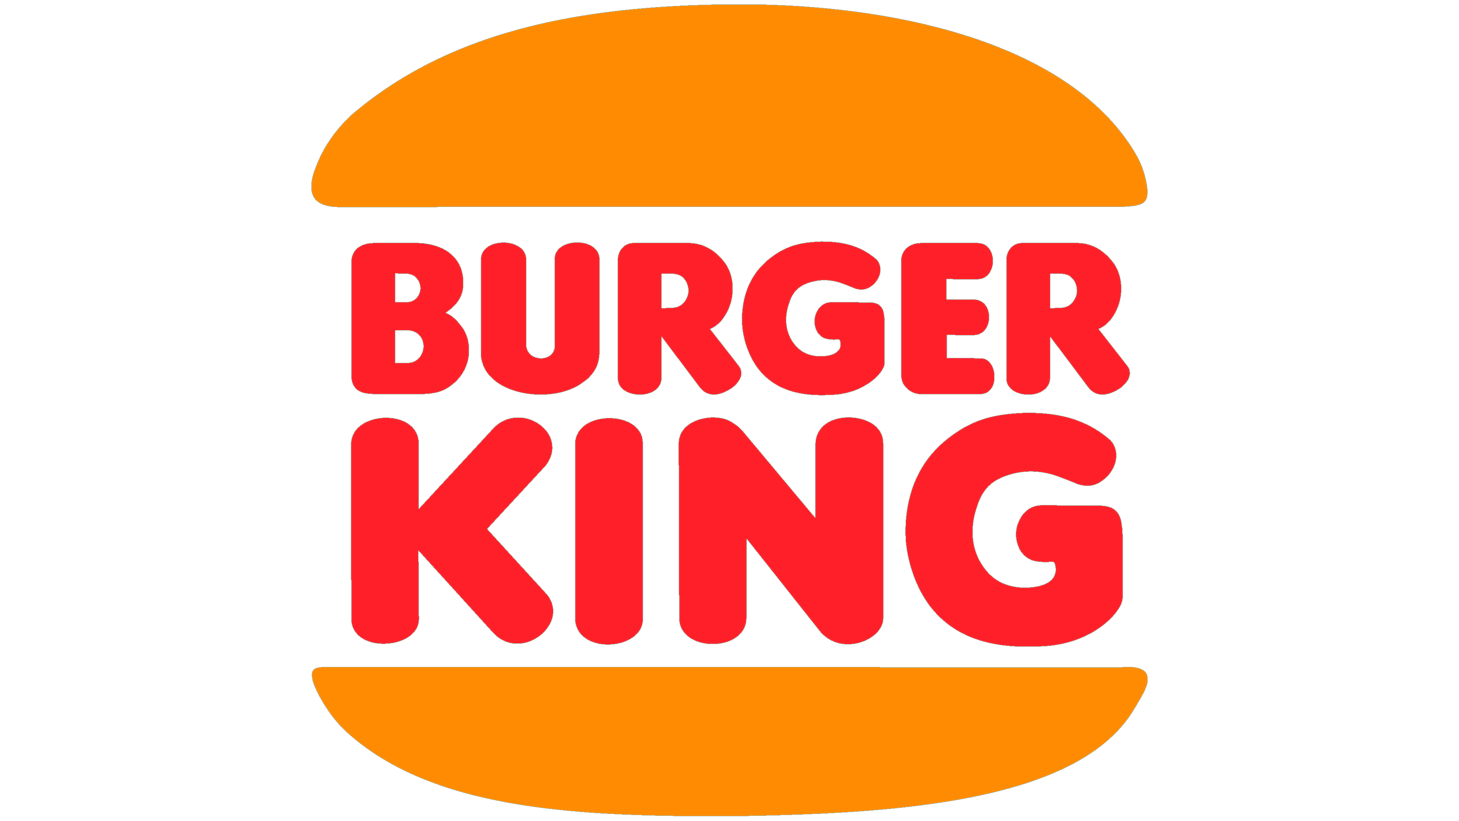 Burger king sign 1994 1999